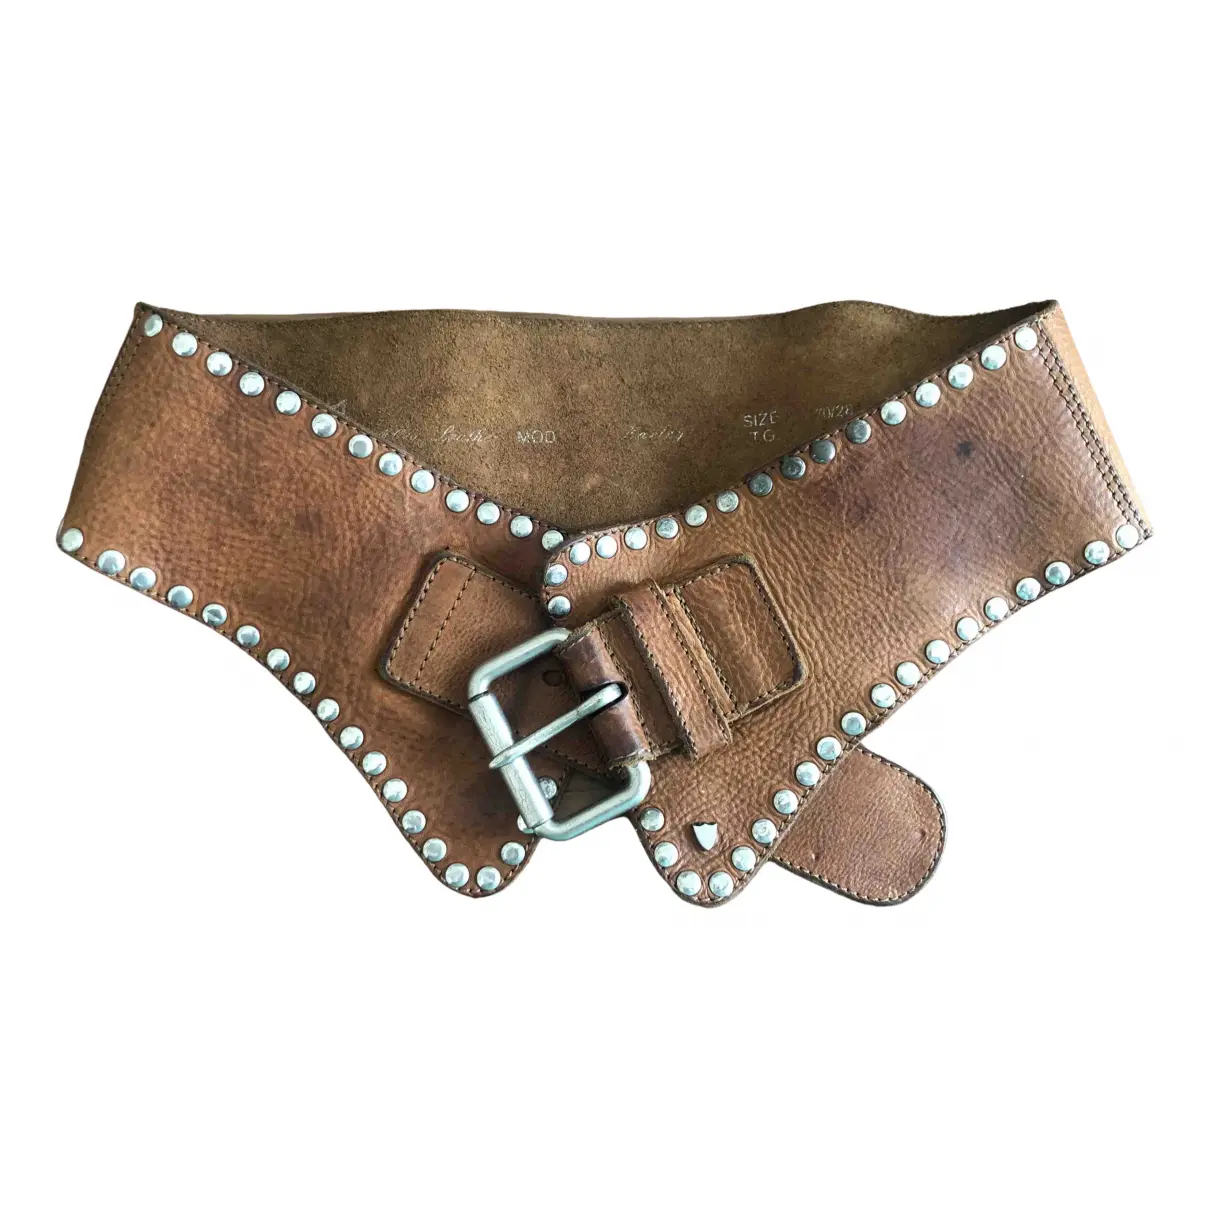 Leather belt Htc